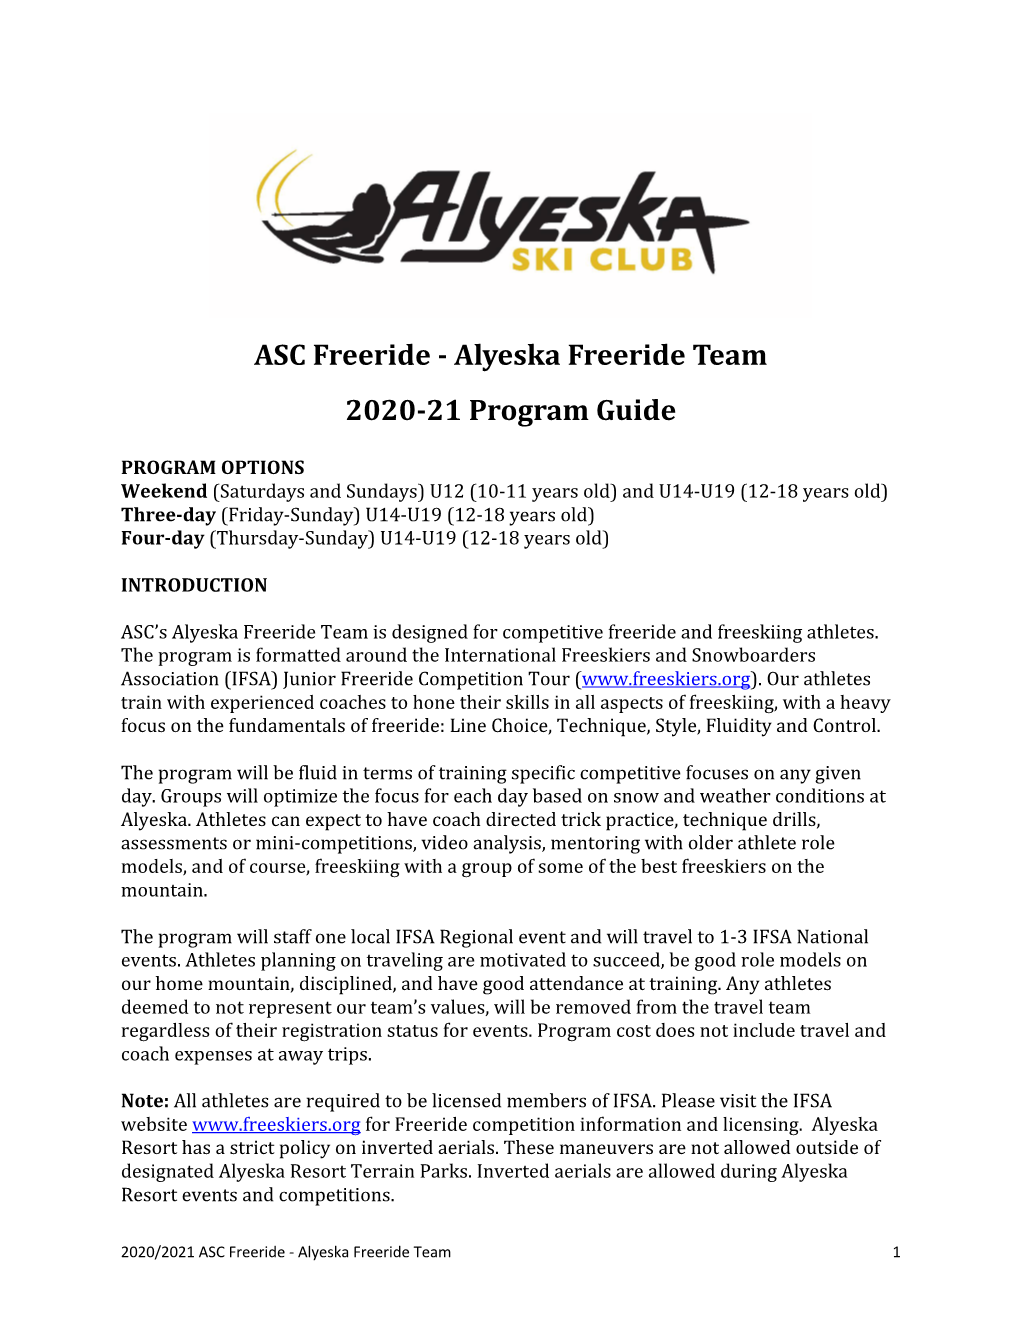 ASC Freeride - Alyeska Freeride Team 2020-21 Program Guide